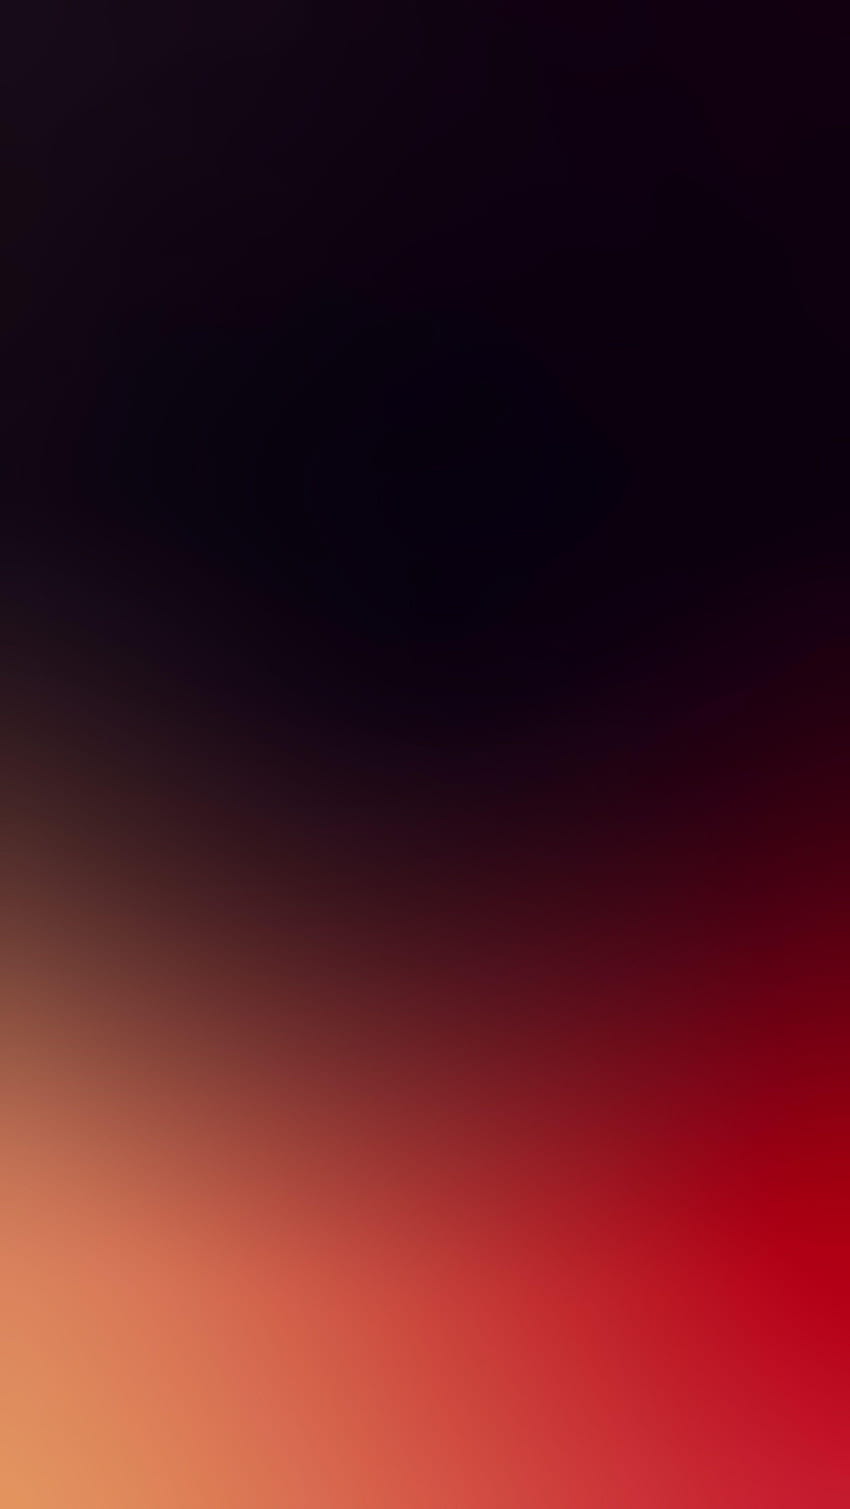 Degradado rojo, degradado de color oscuro fondo de pantalla del teléfono